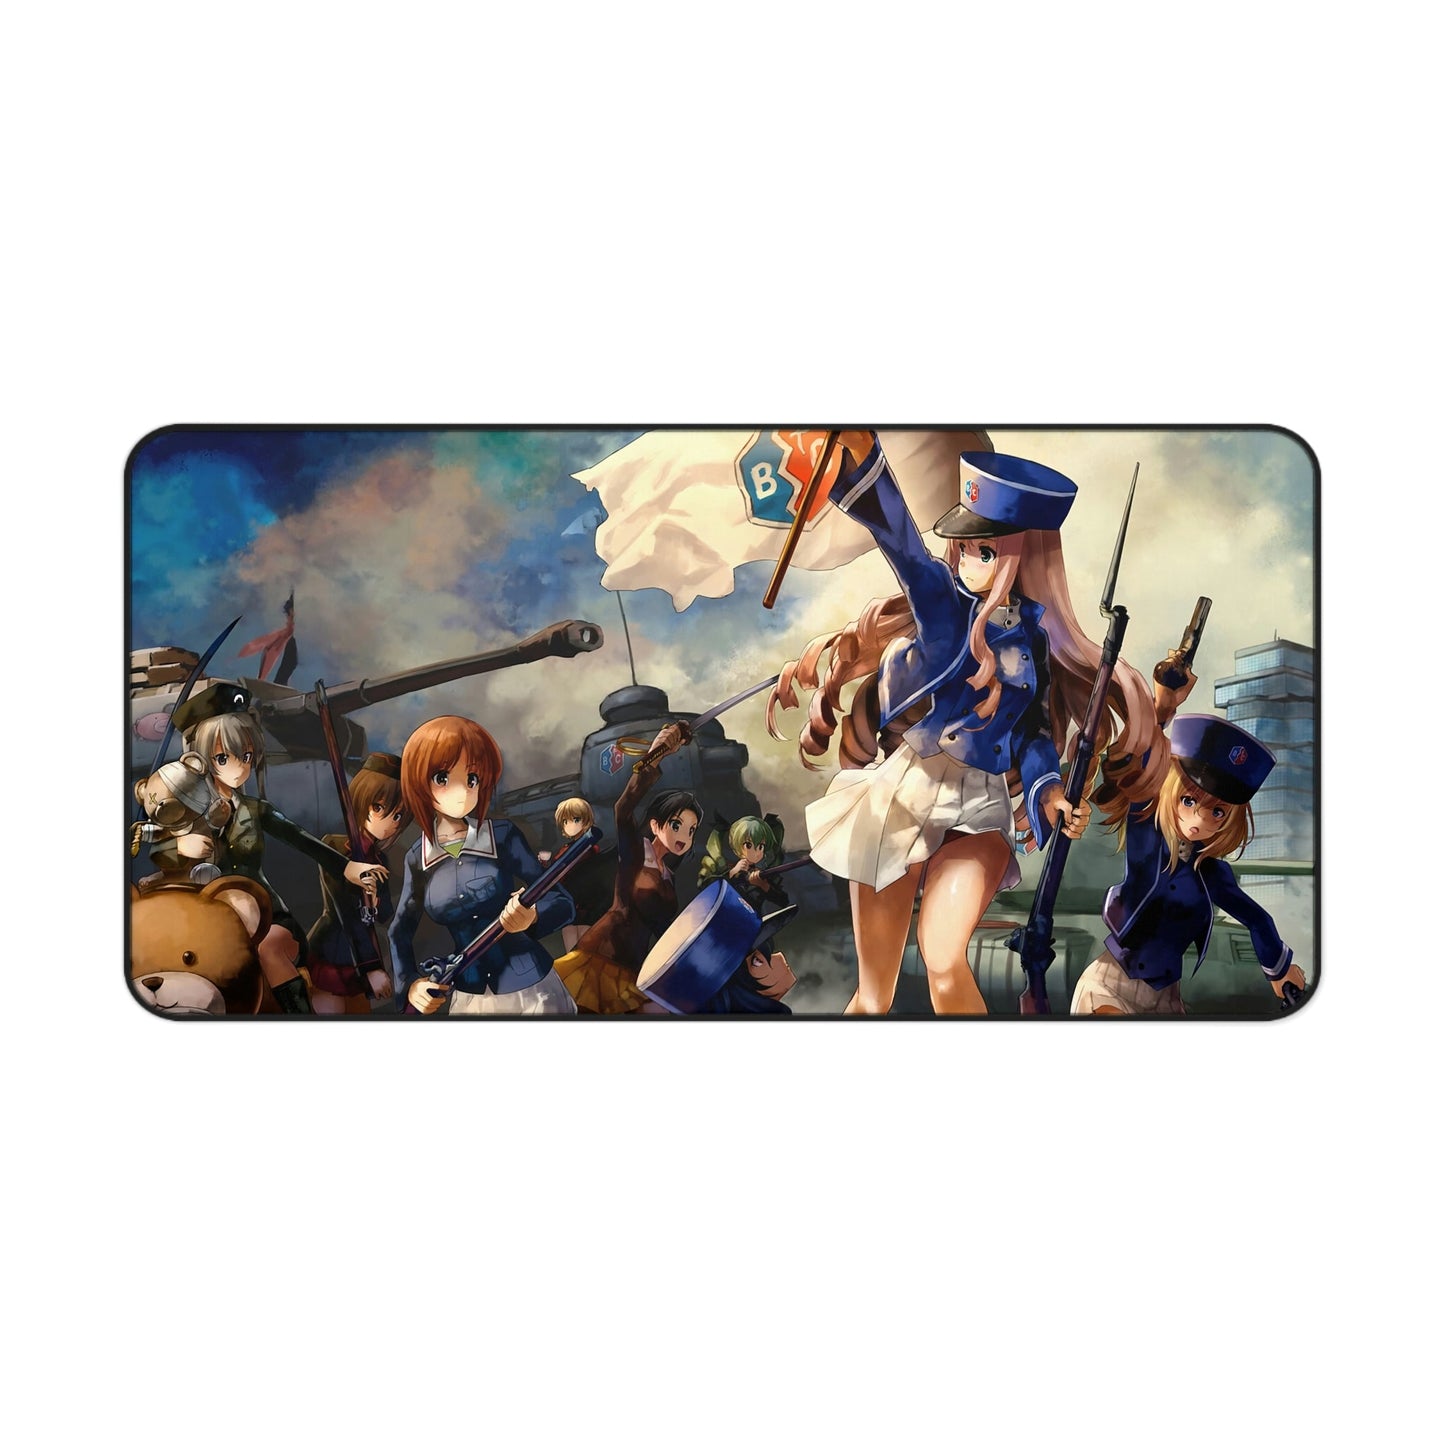 Girls und Panzer Liberty Leading the People Eugene Delacroix Parody Desk Mat - Non Slip Mousepad